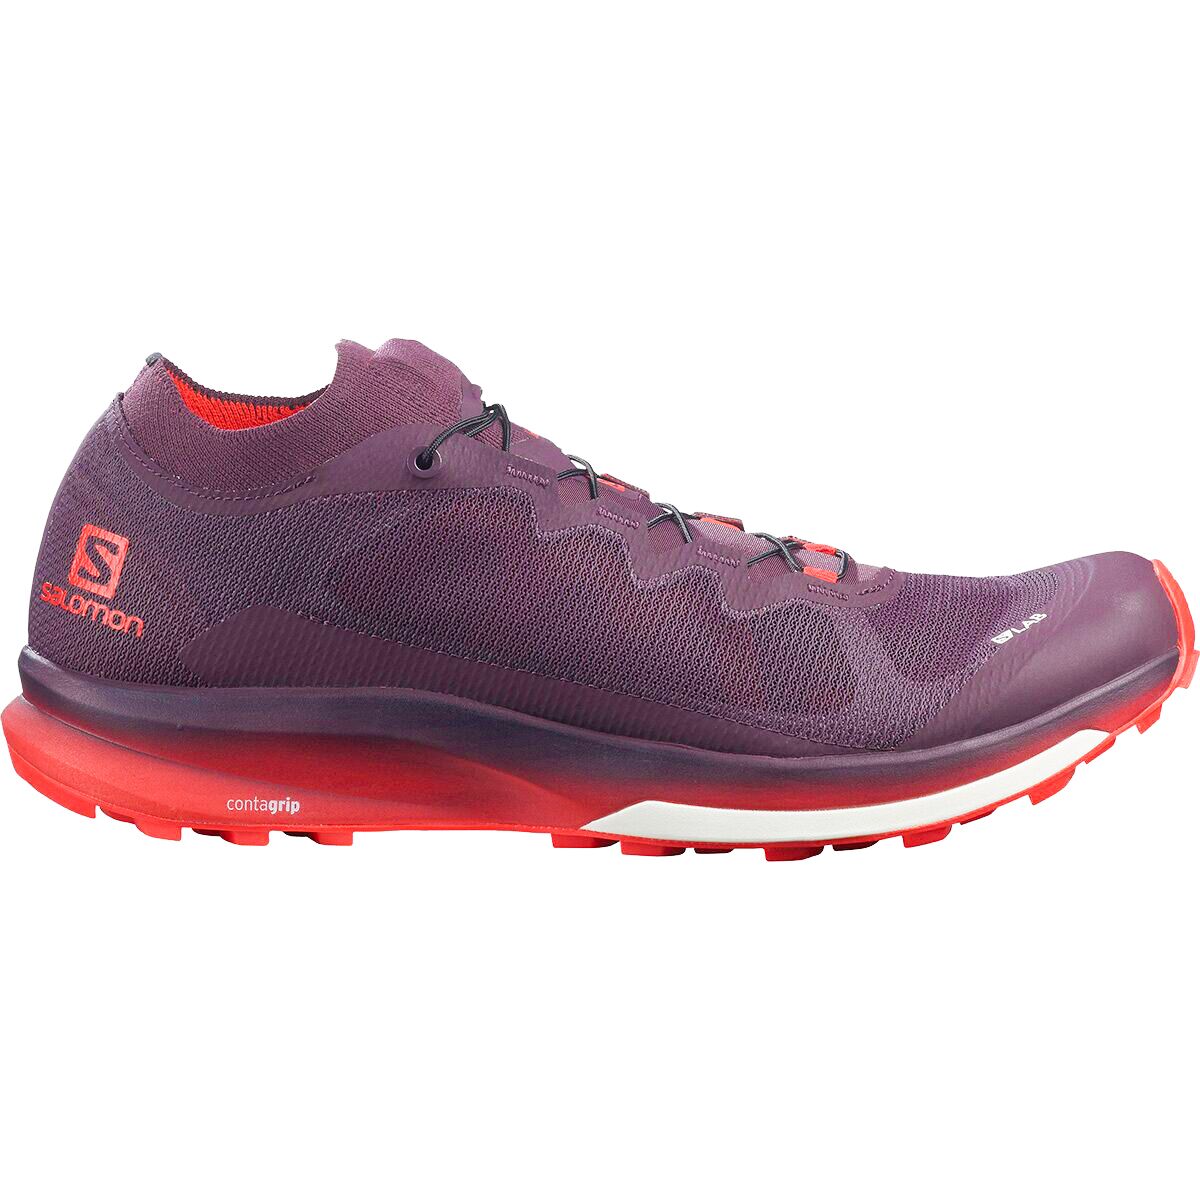 Salomon S/Lab Ultra 3 Trail Running Shoe - Men's